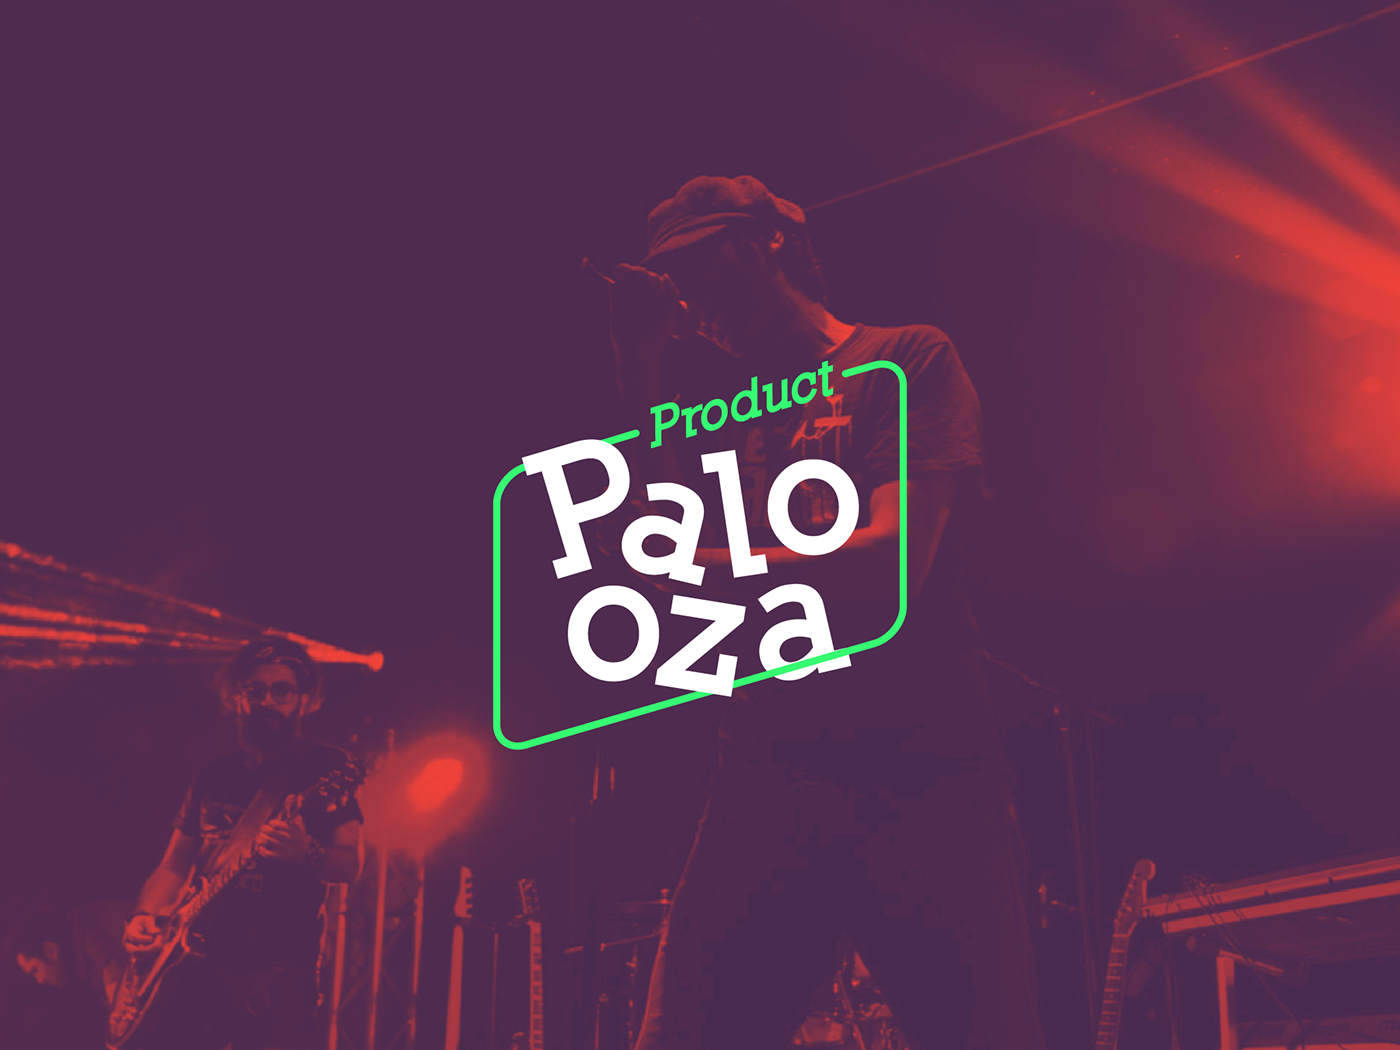 festival involves lollapalooza music palooza product psicodelic rocknroll Show Trade Marketing